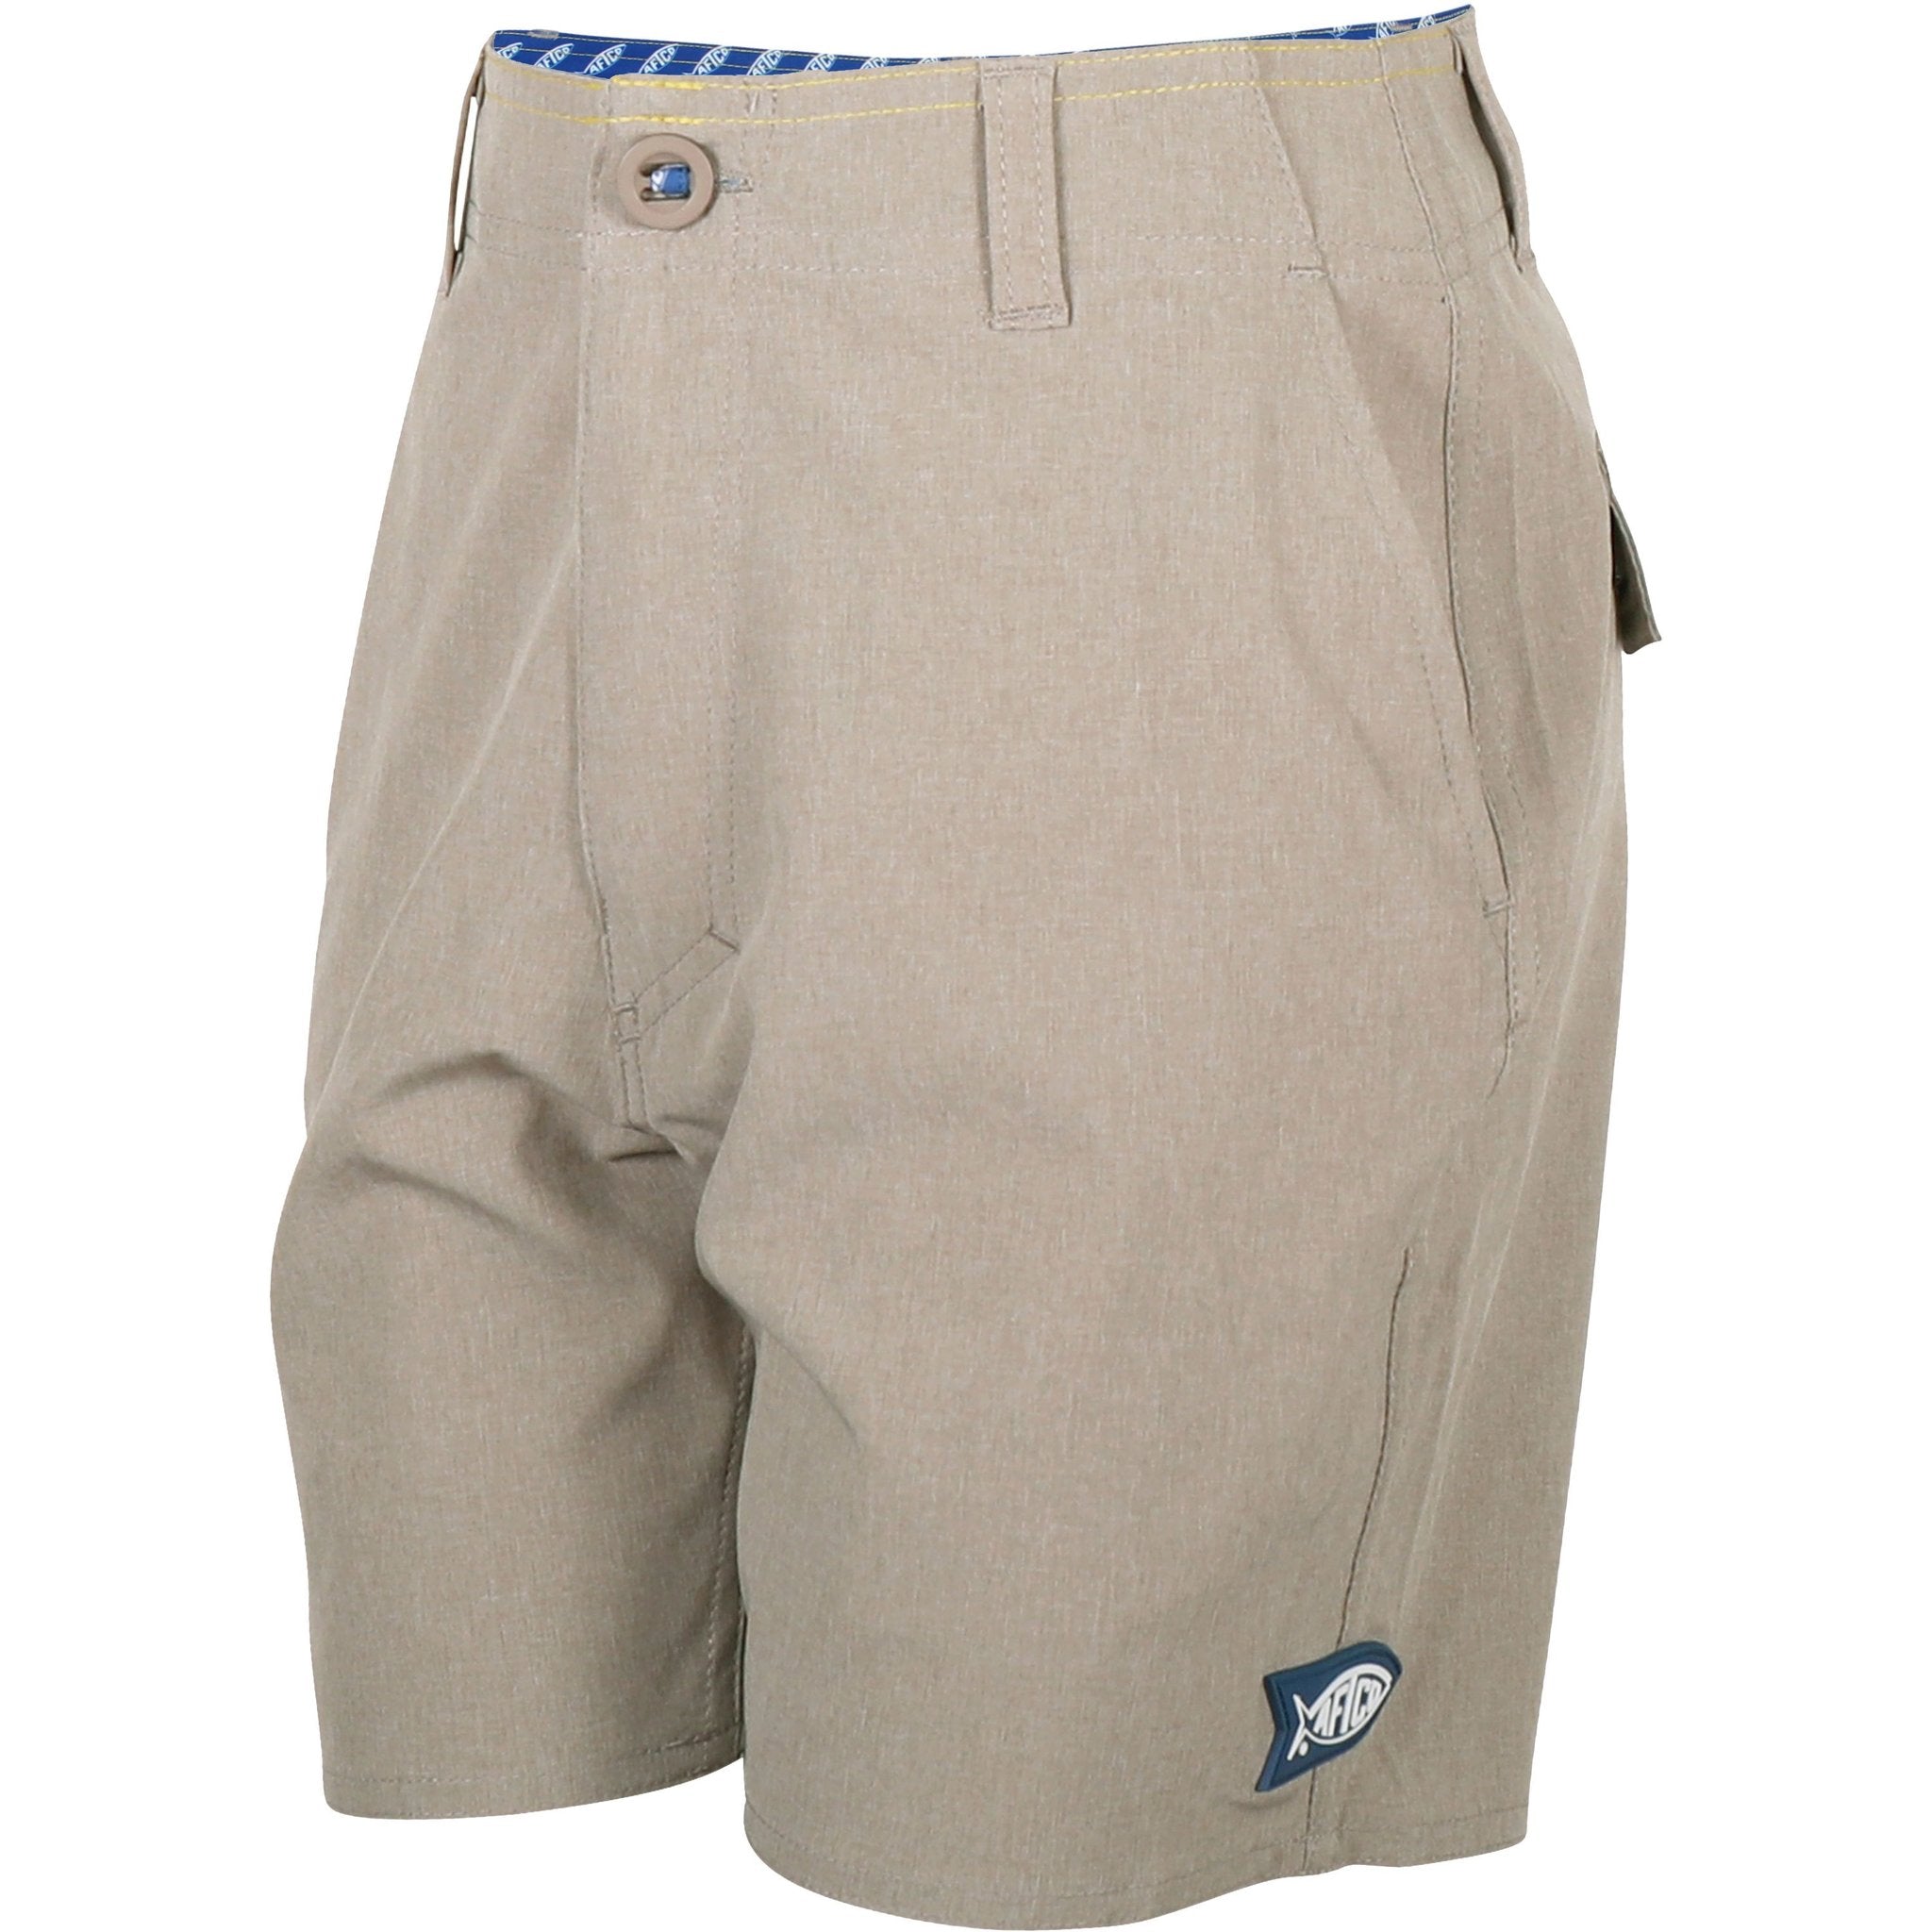 Aftco Boys Cloudburst Shorts